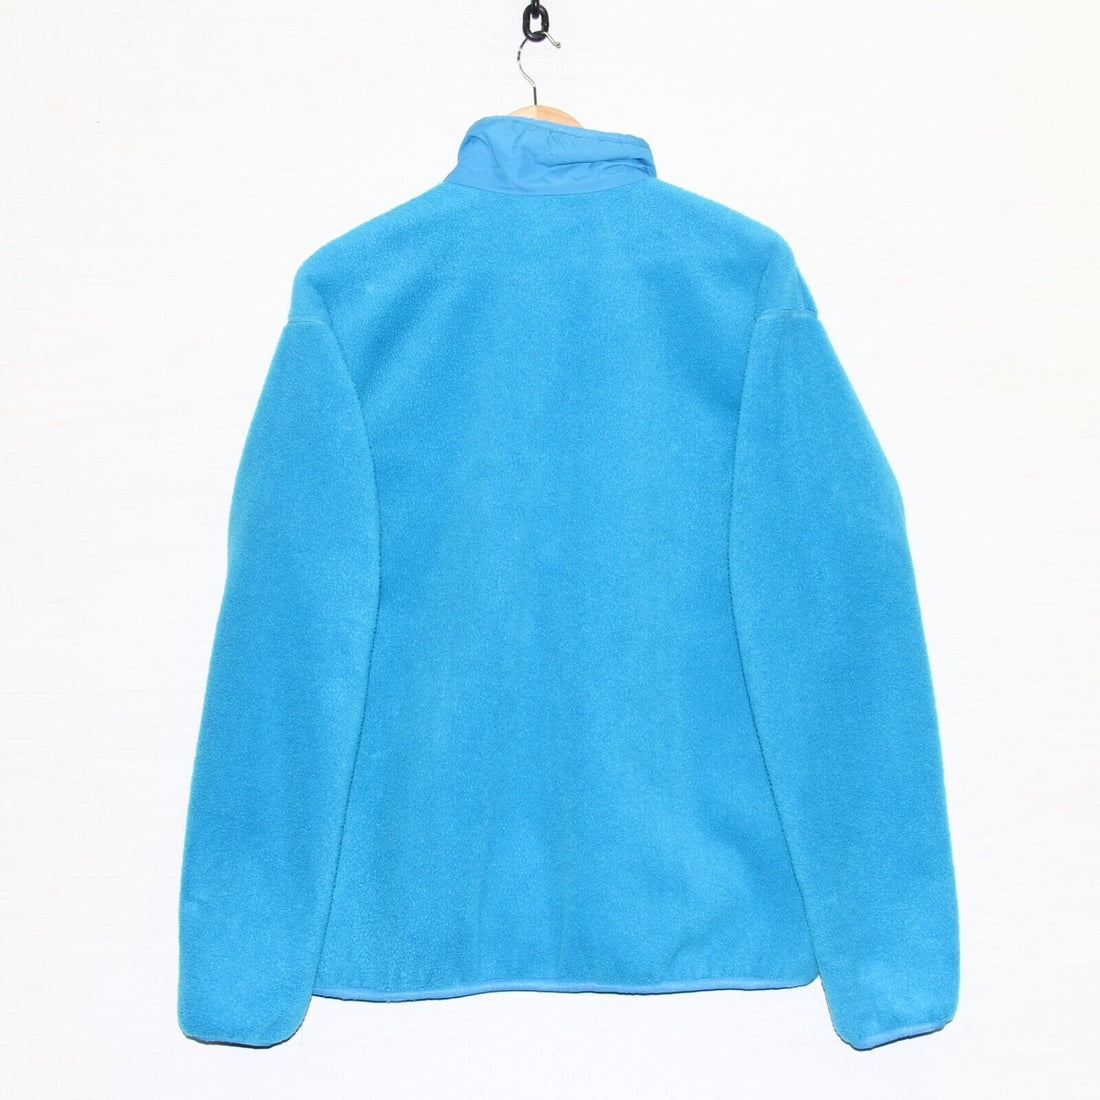 Vintage Patagonia Fleece Jacket Size Medium Blue Full Zip